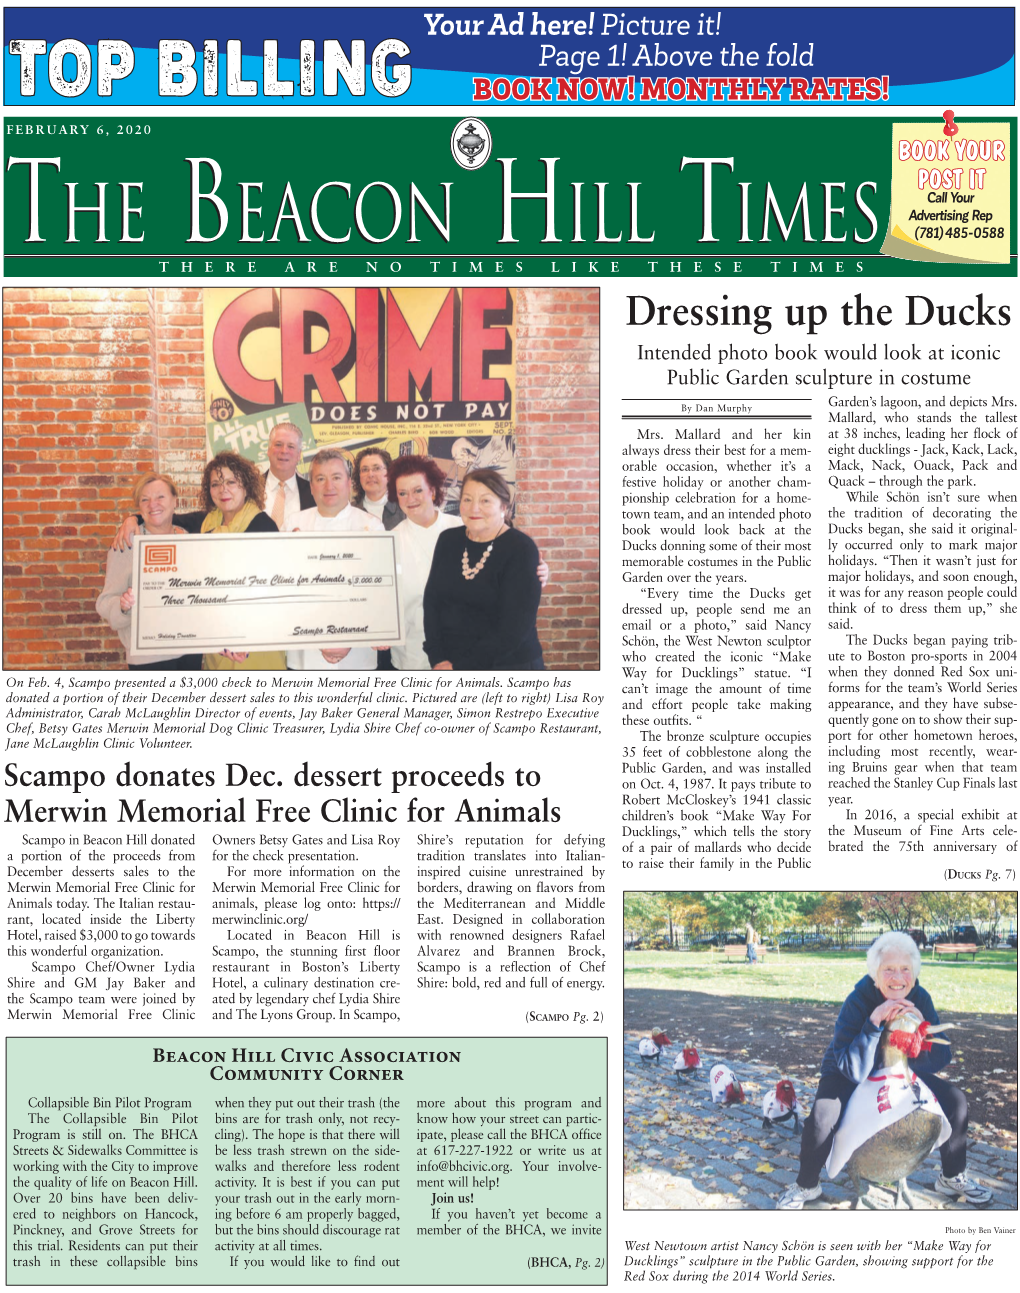 Beacon Hill Civic Association Community